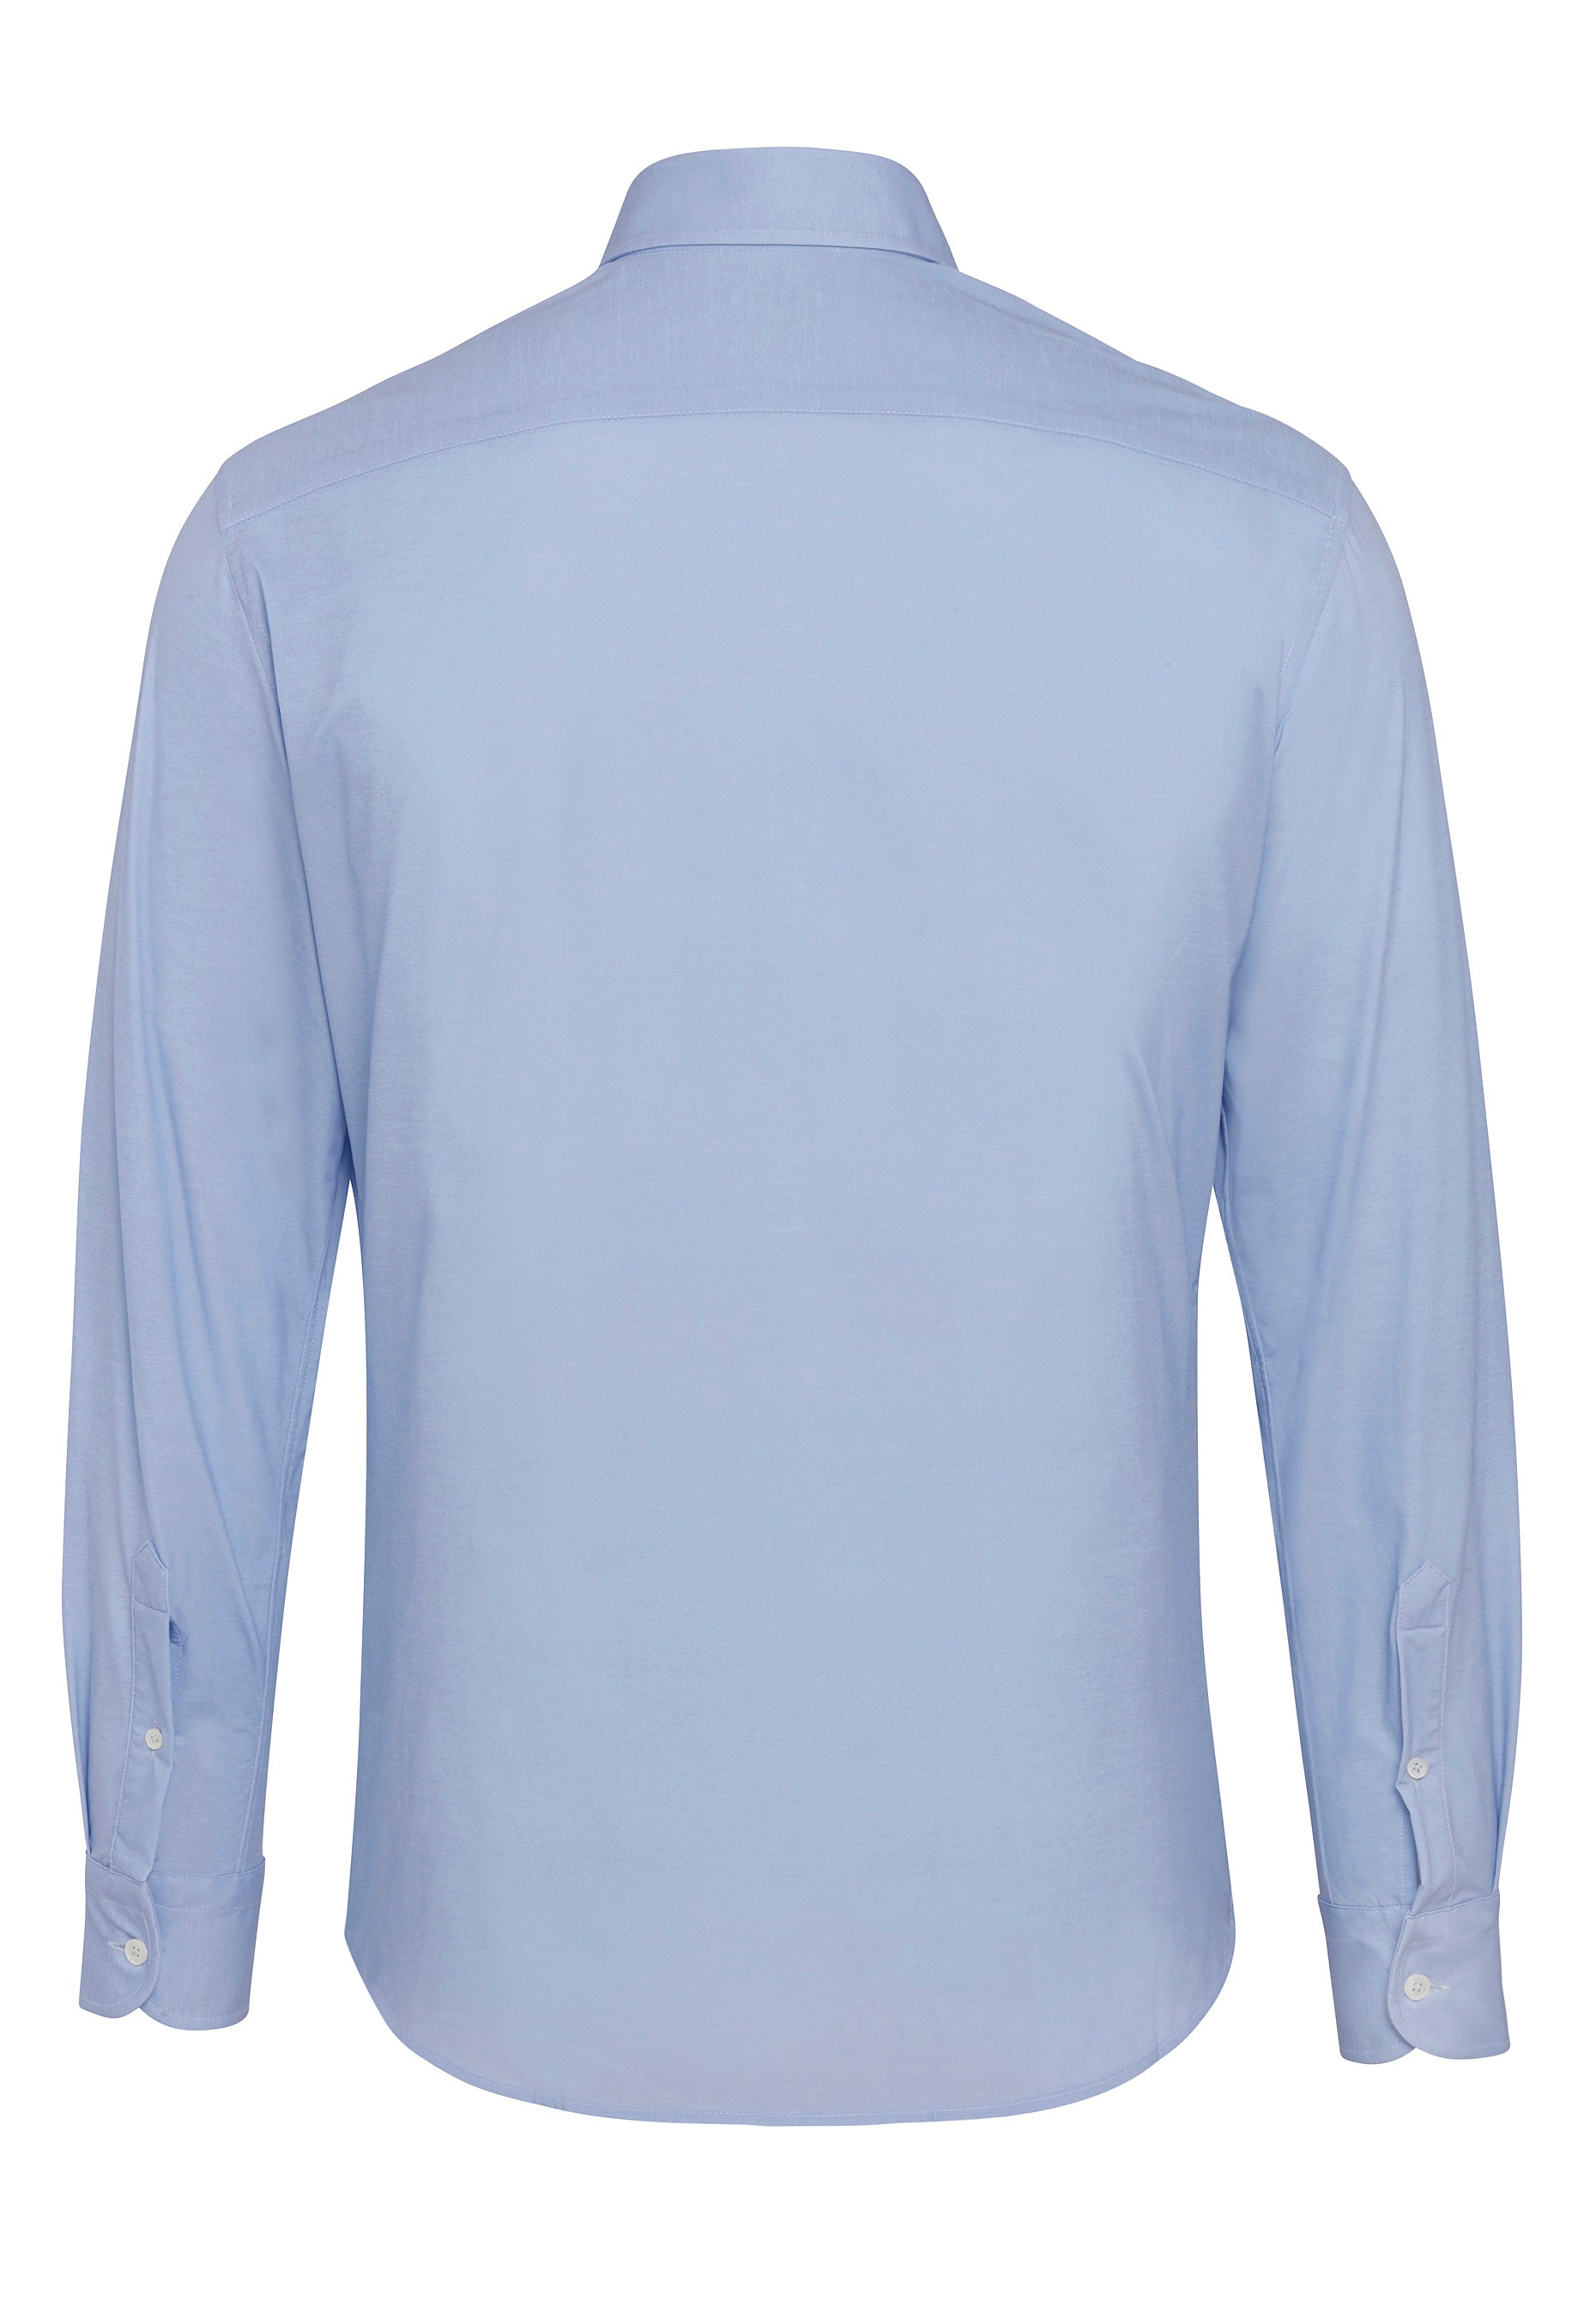 T1010-312 - Button Down Radical Fit Shirt - blue